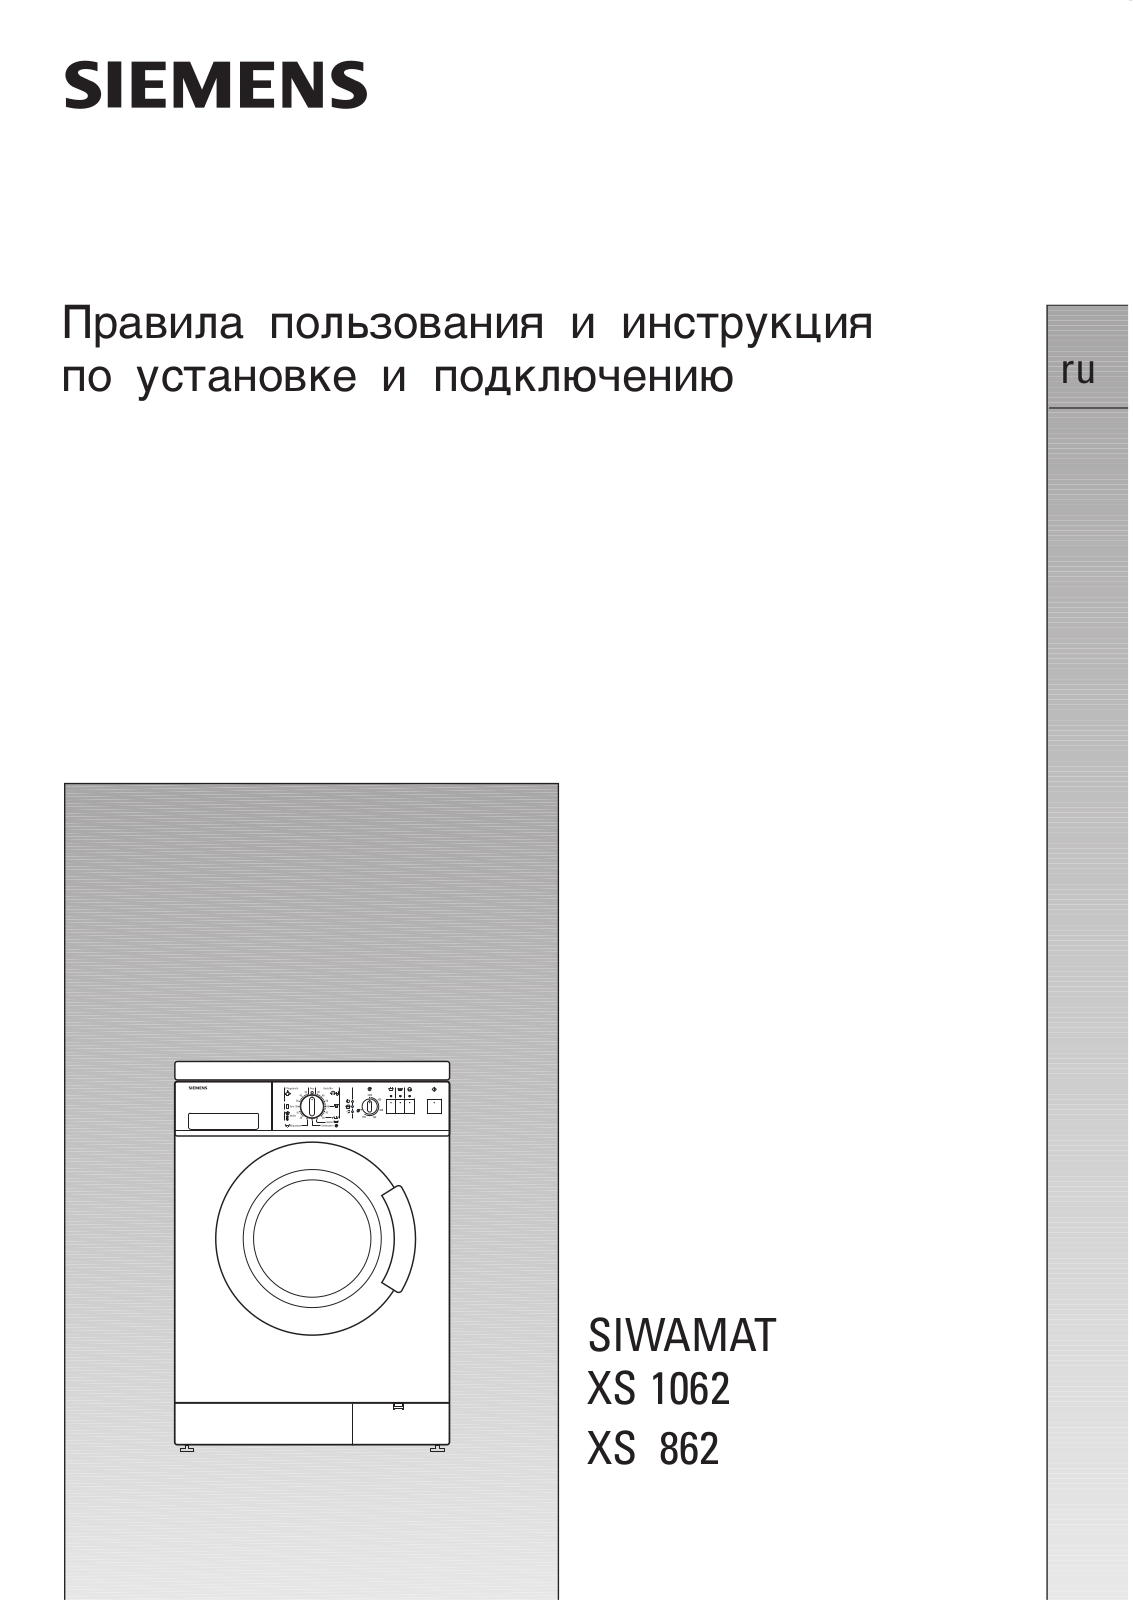 Siemens WXS862OE User Manual